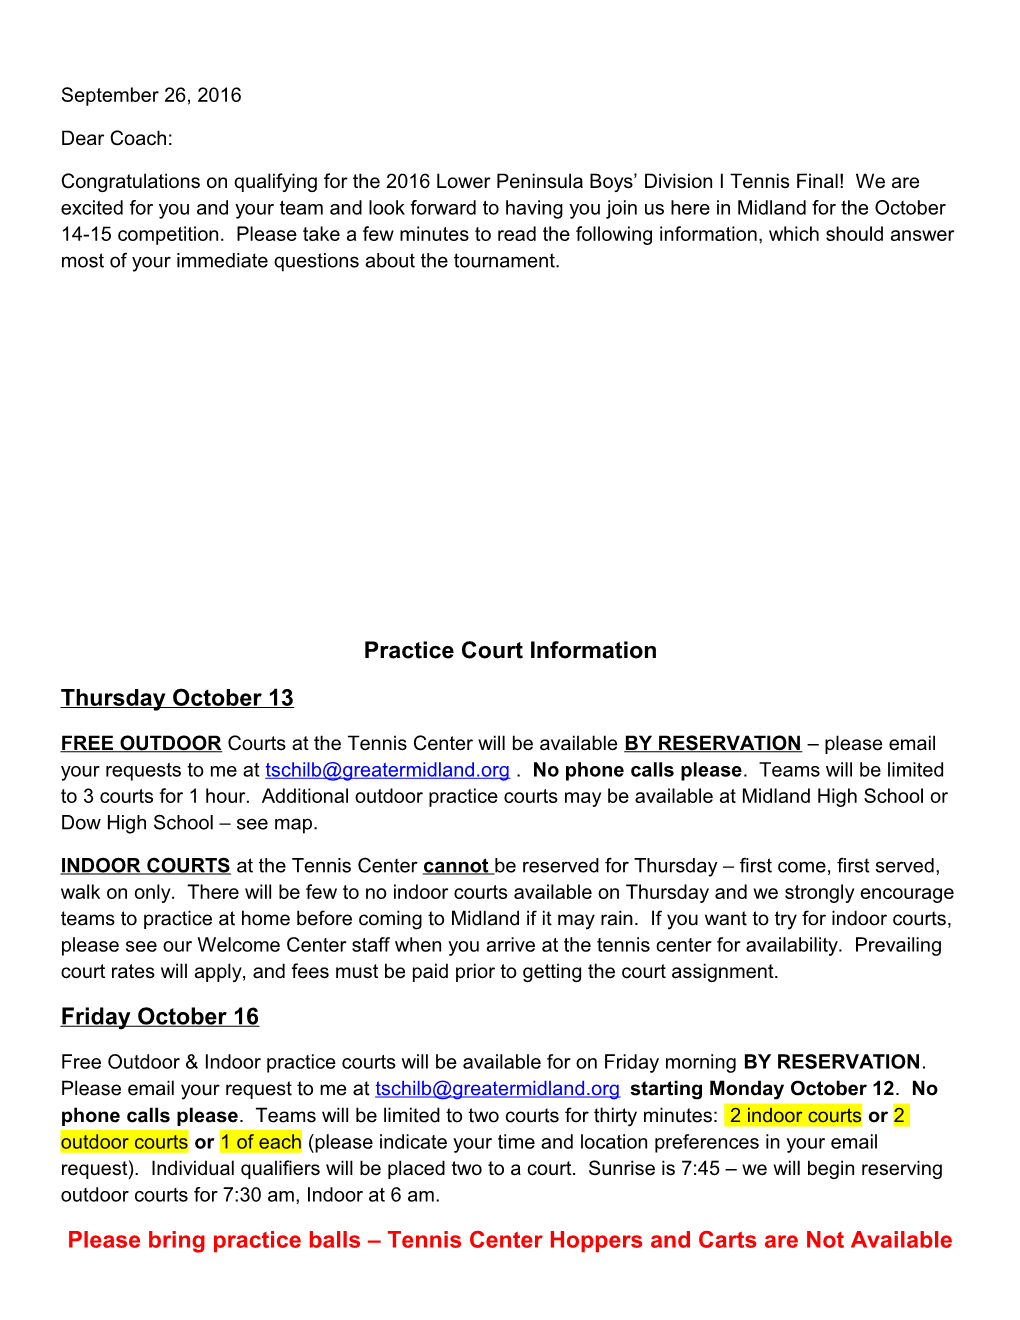 Practice Court Information